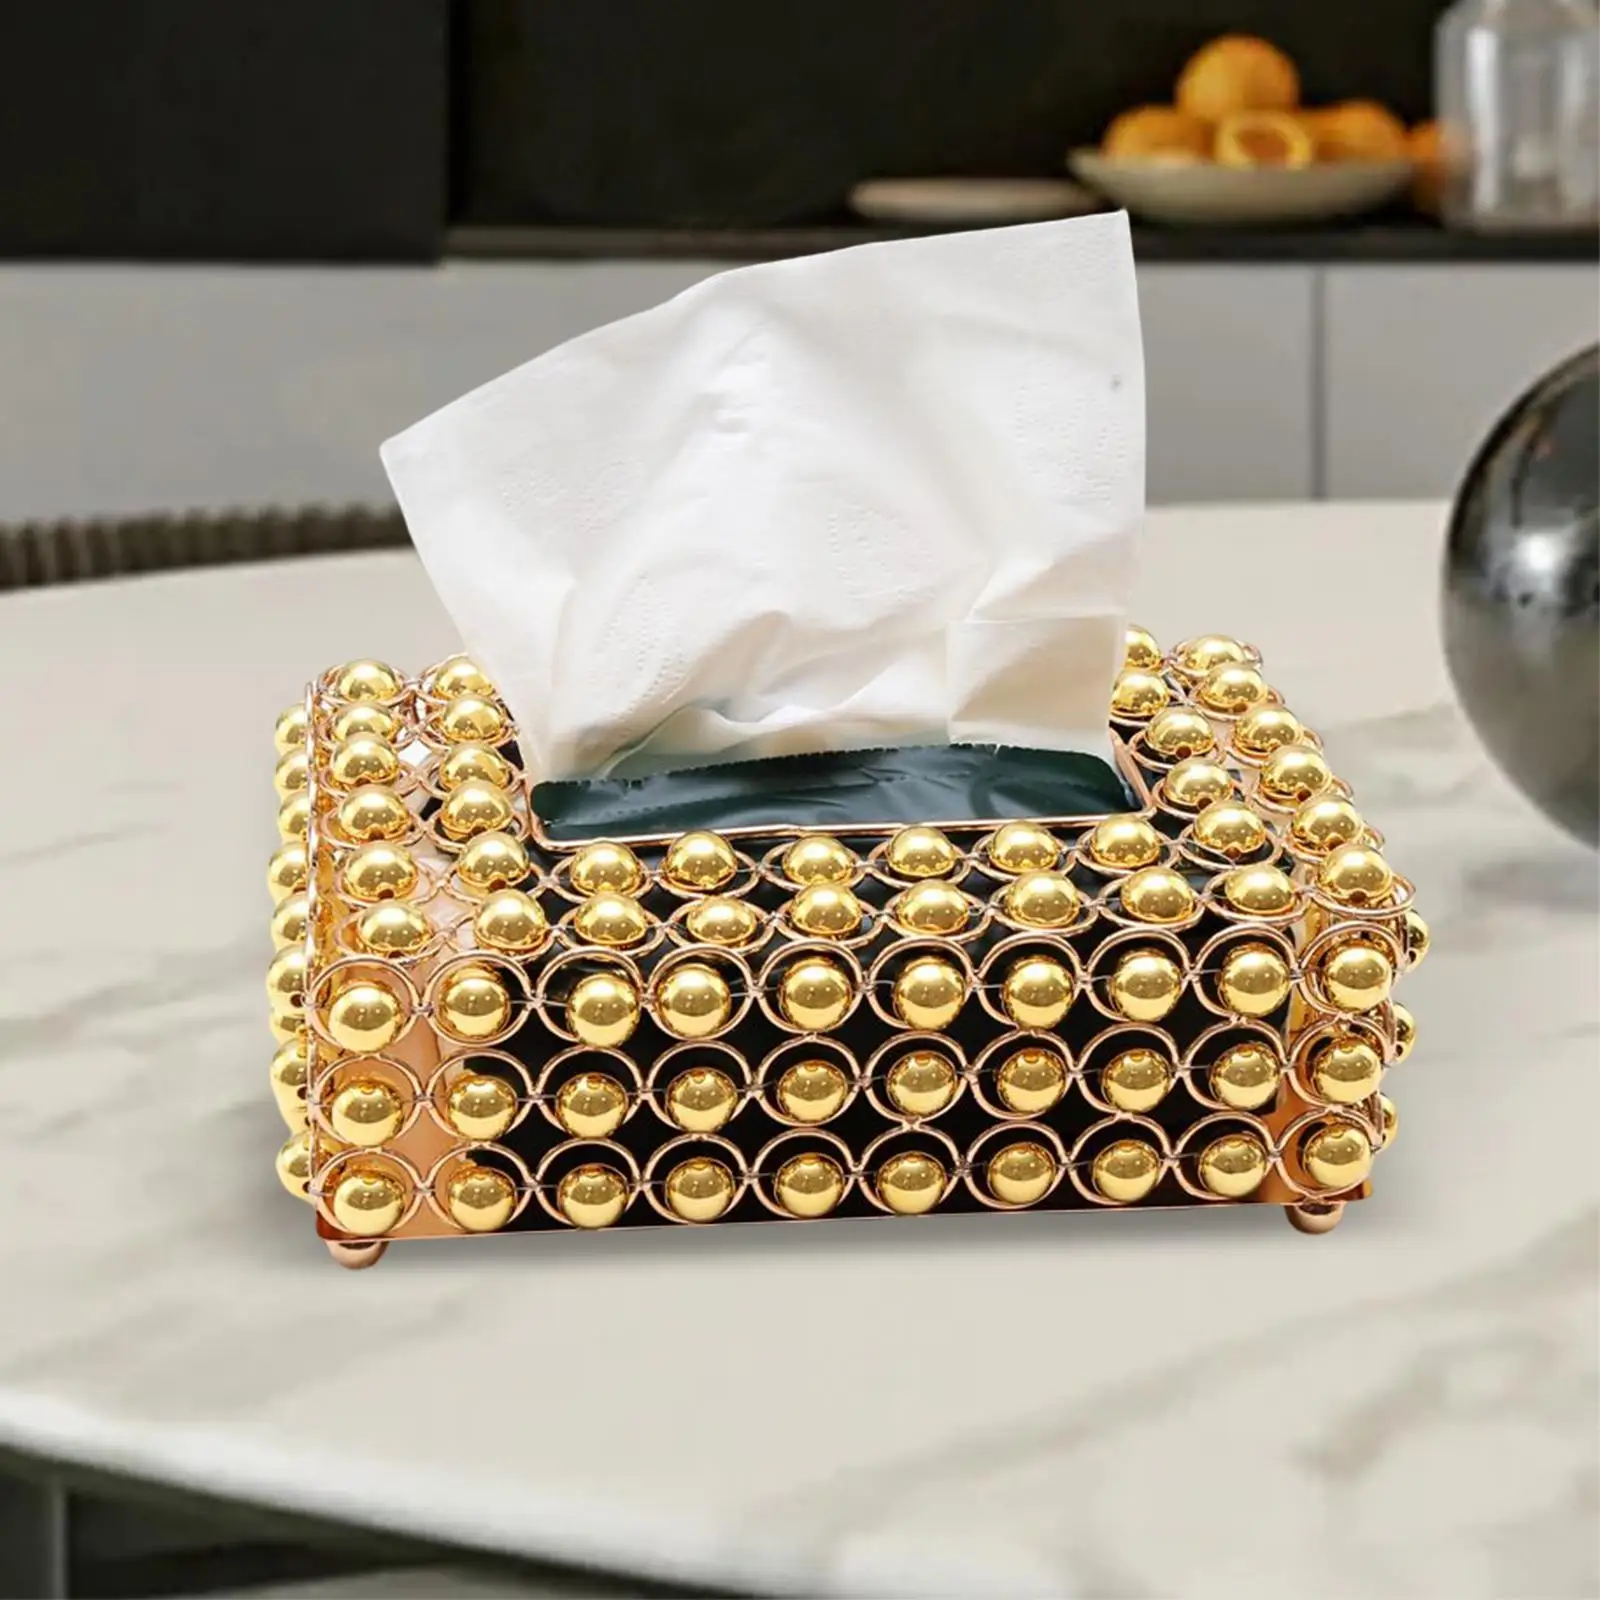 Shinning Golden Metal Simulation Pearl Tissue Box Cover for Desk Table Elegant Napkin Holder House Warming Gift Luxurious